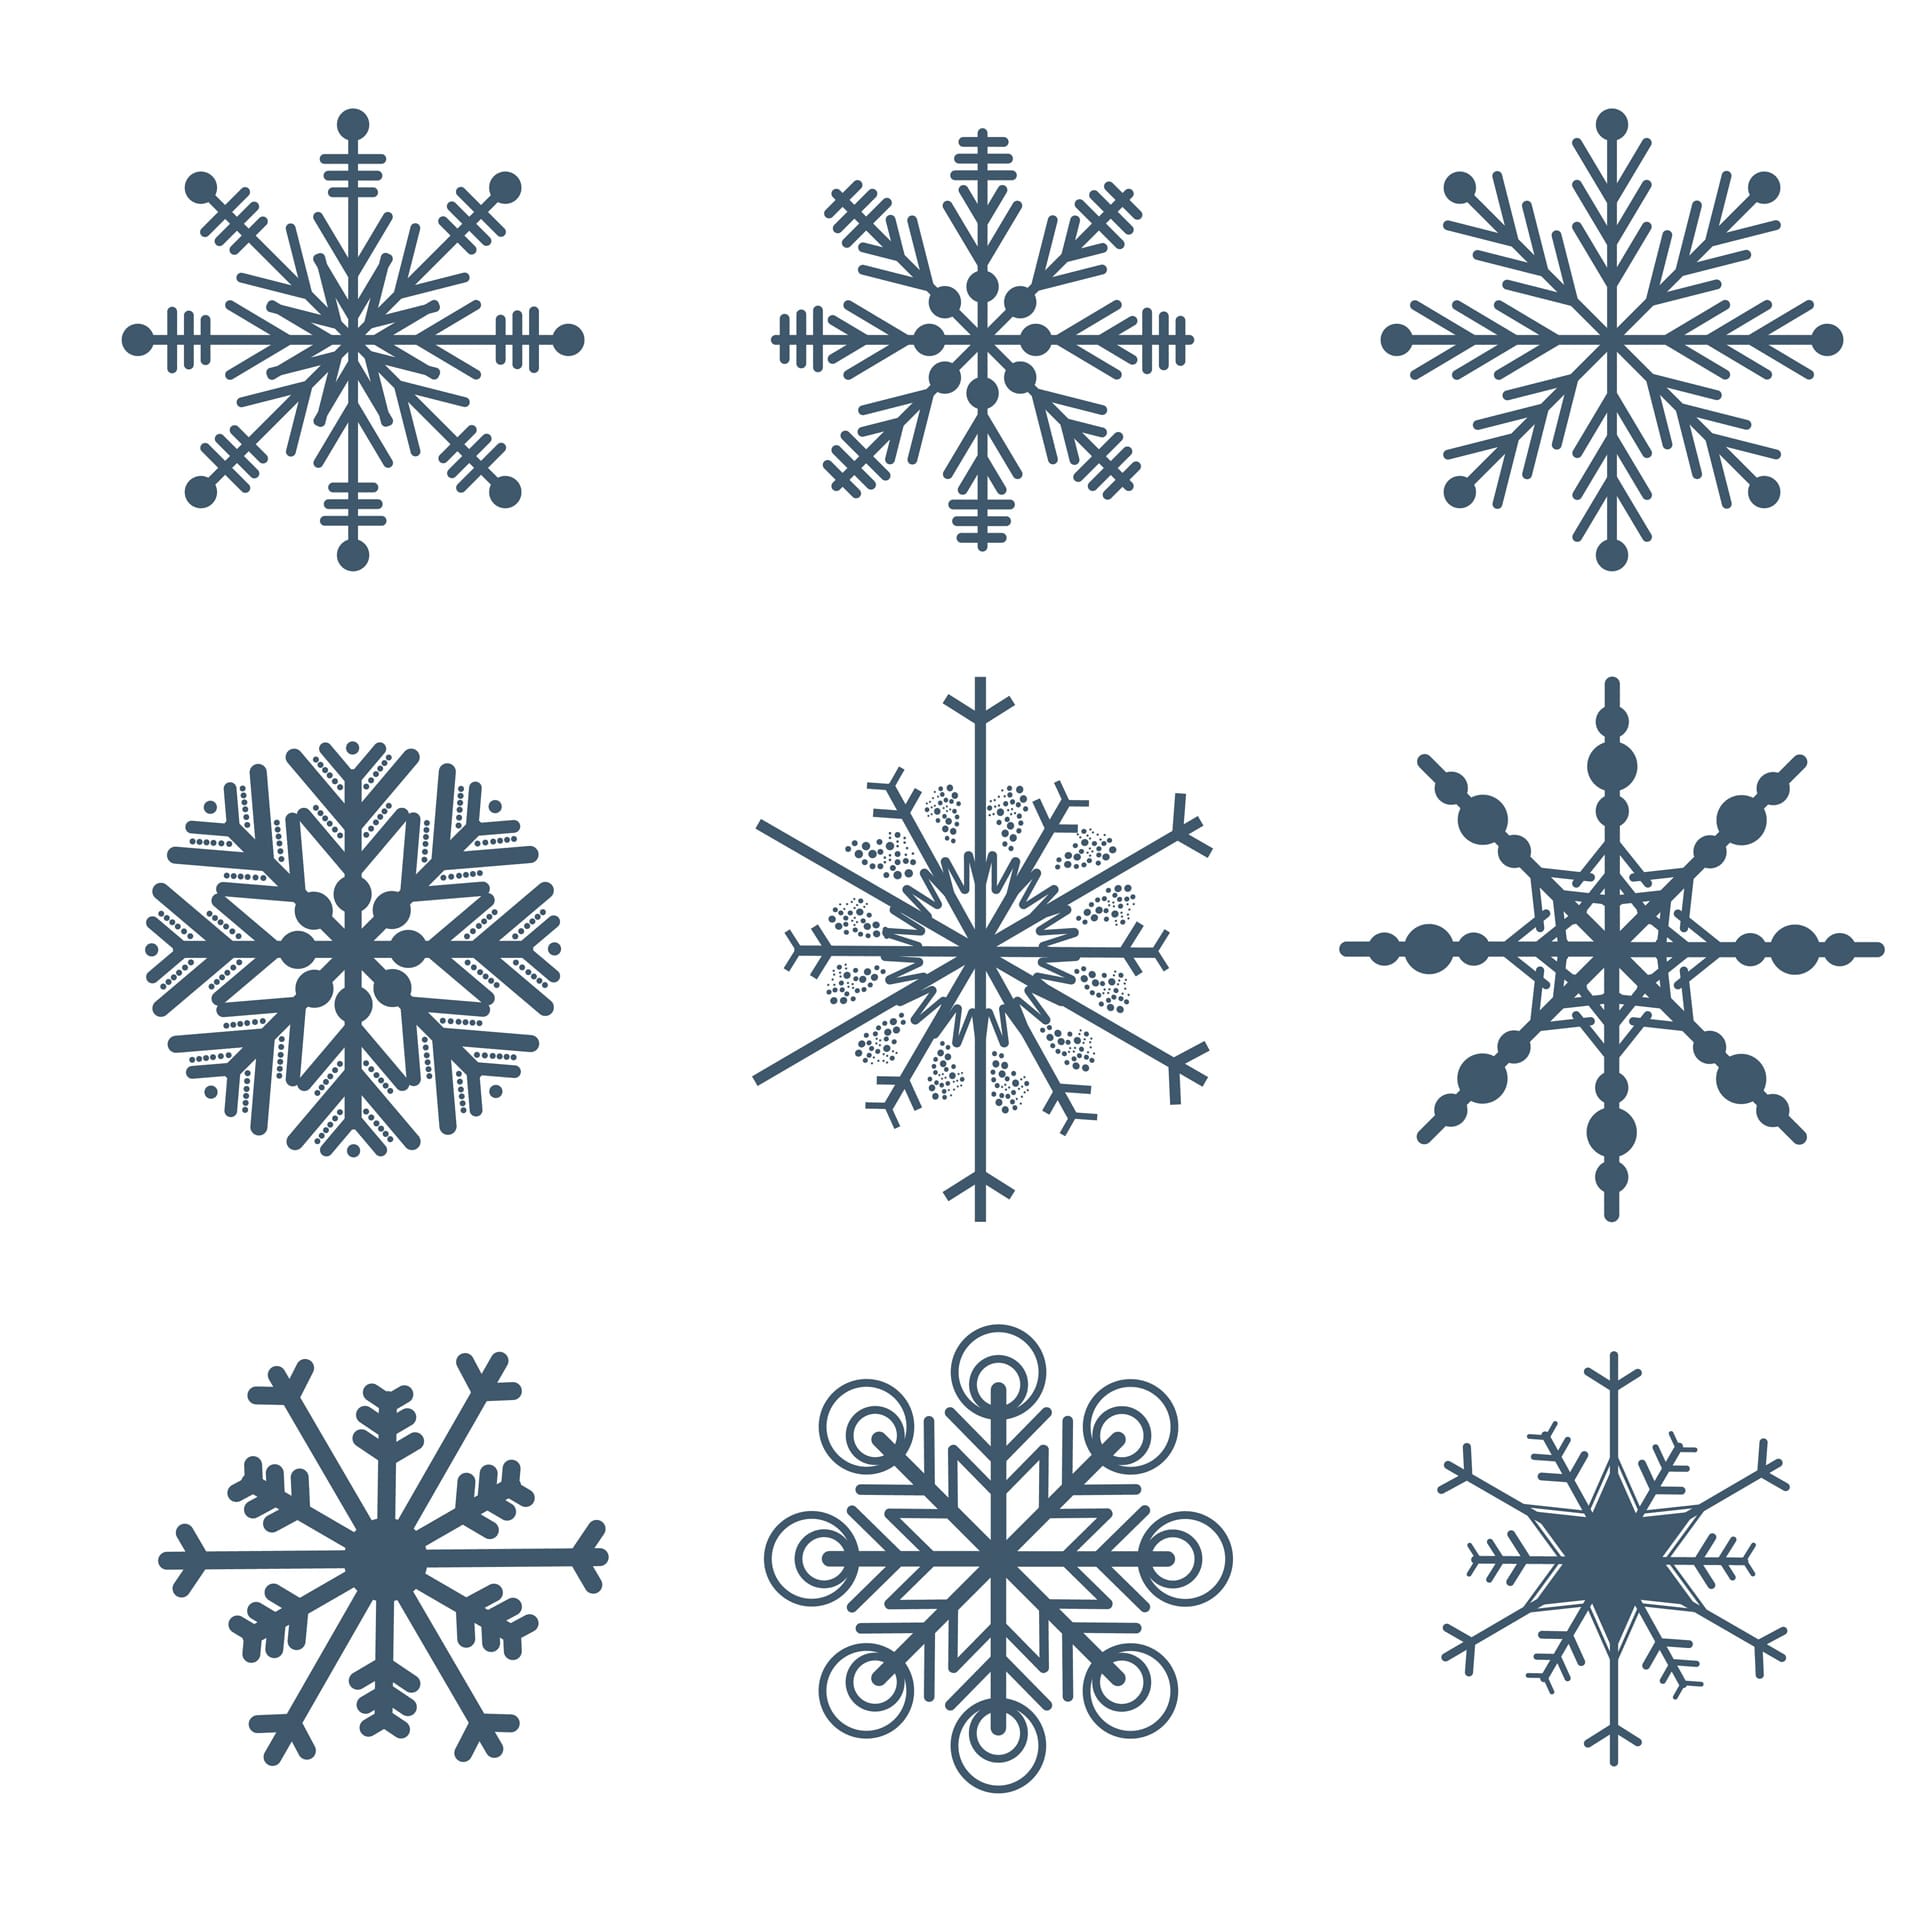 Beautiful snowflakes set elements snowflake clipart